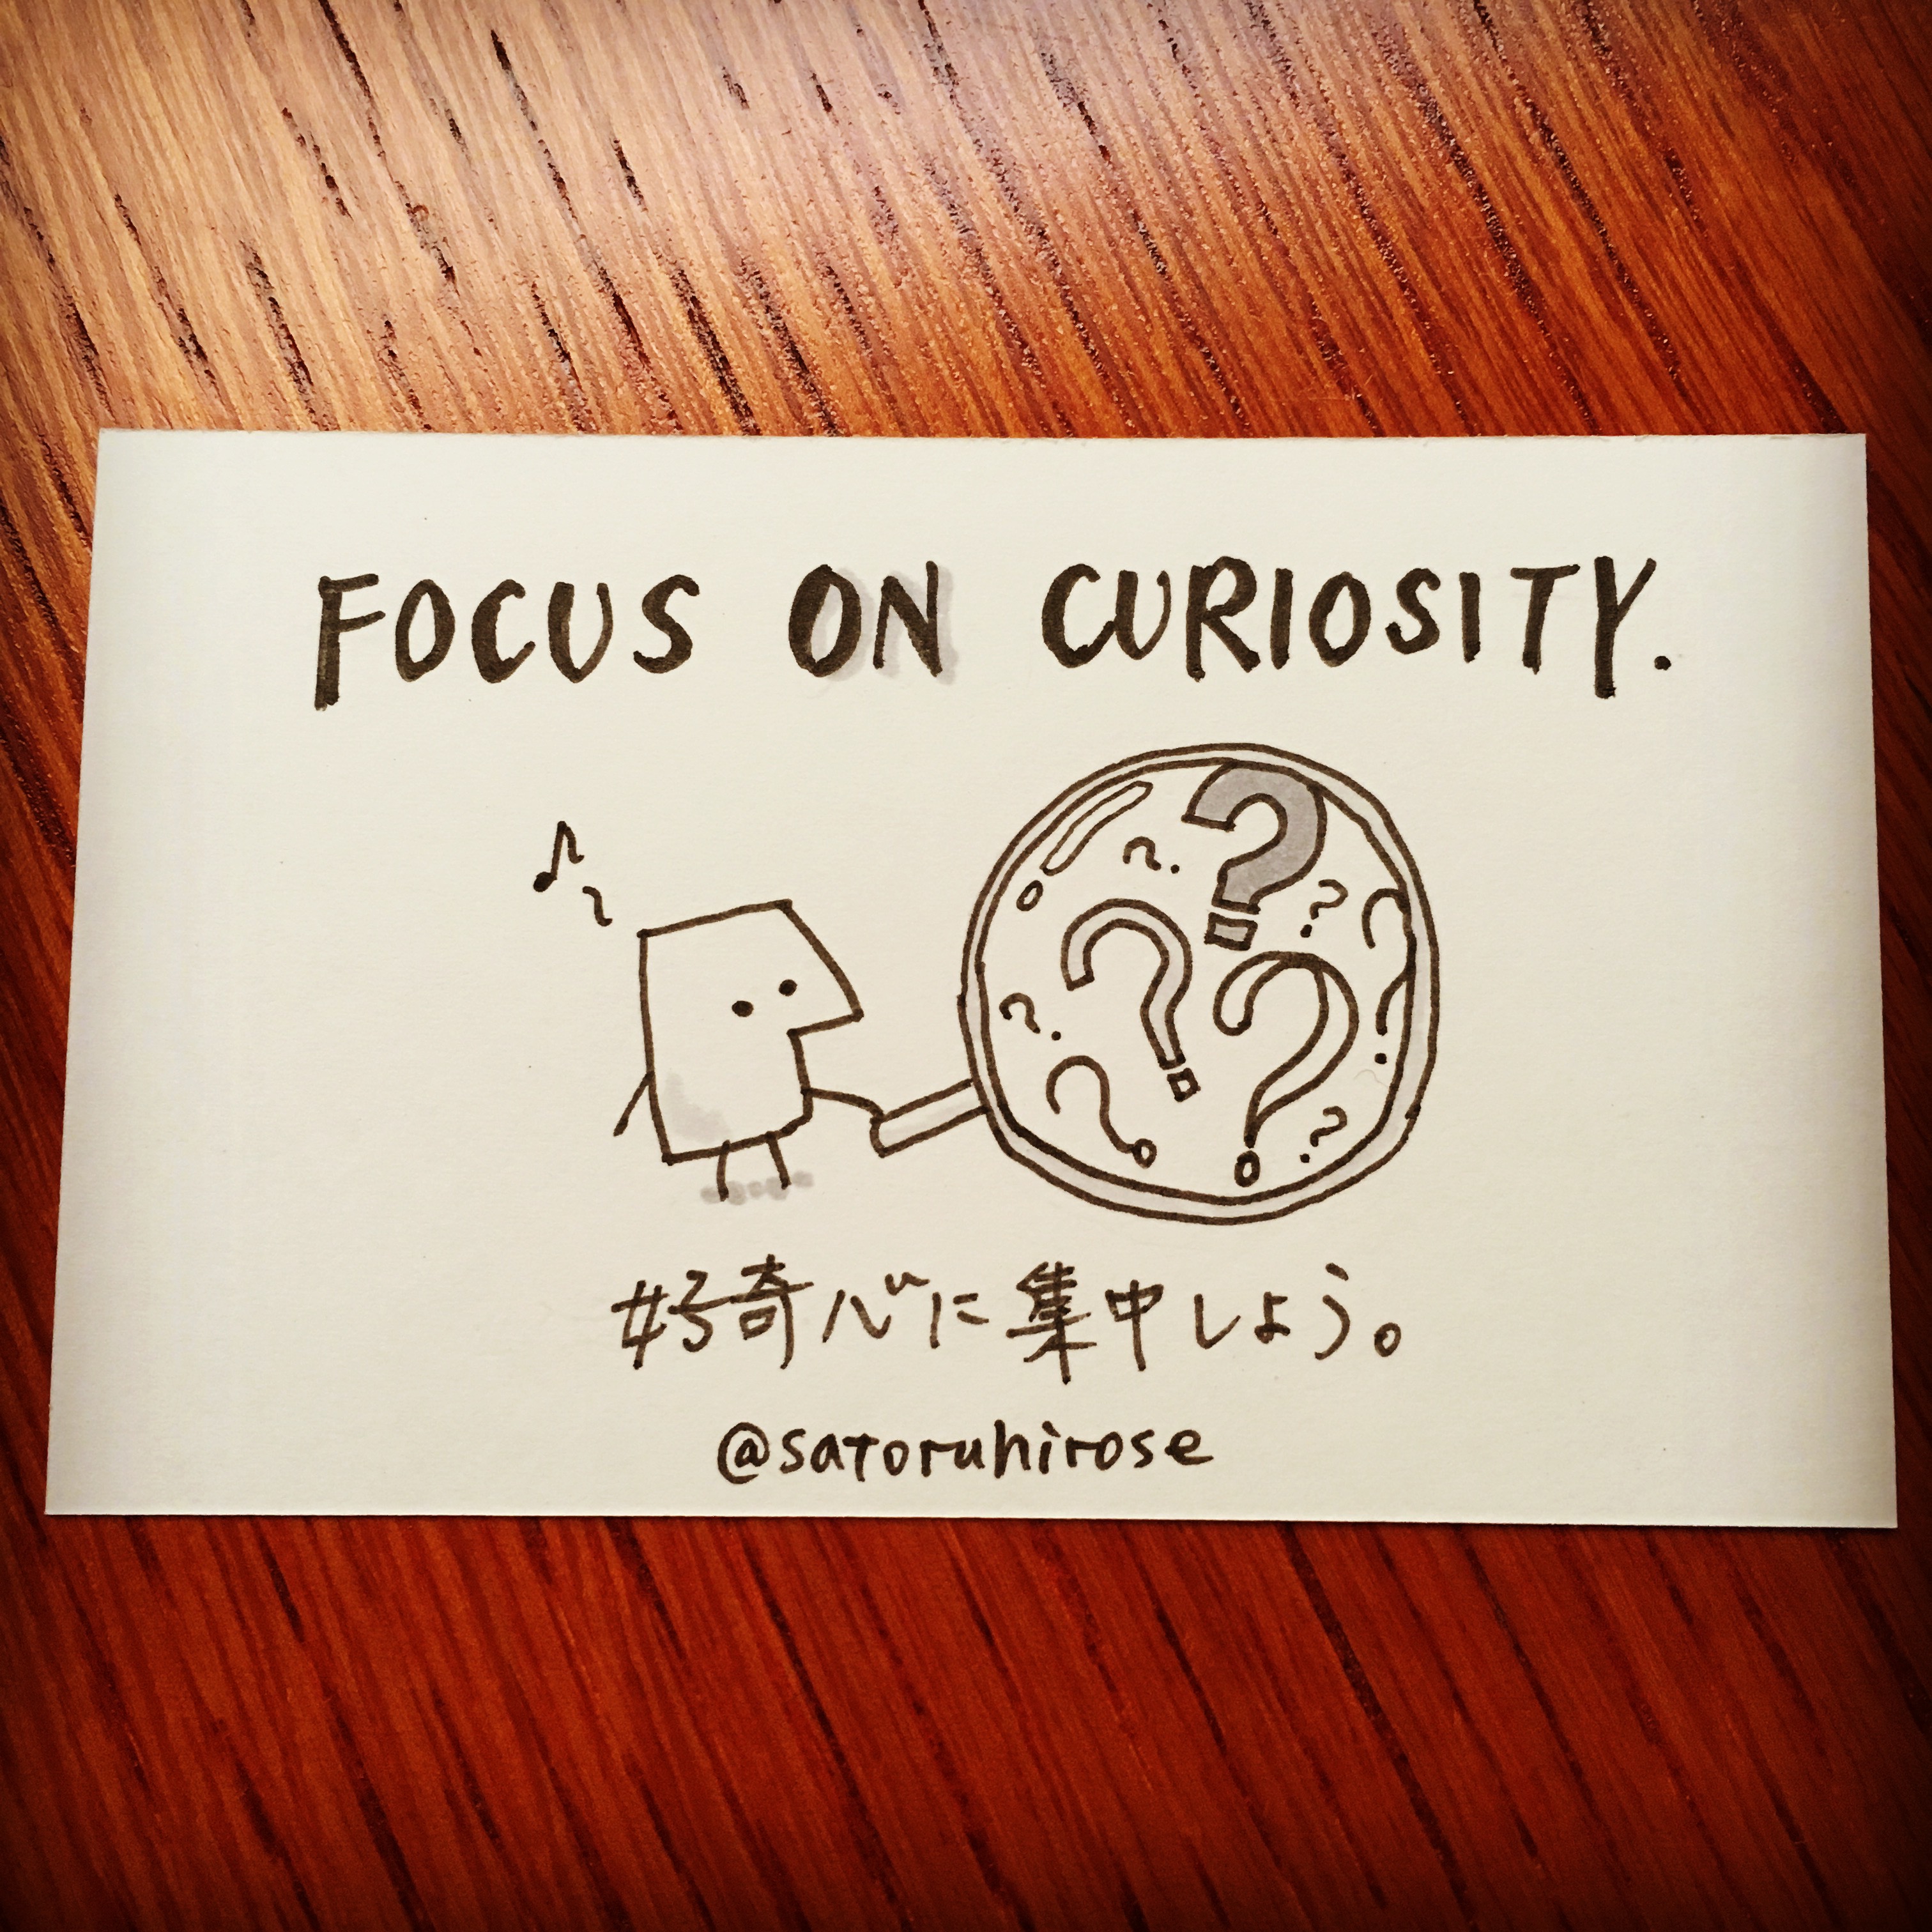 Focus on curiosity.